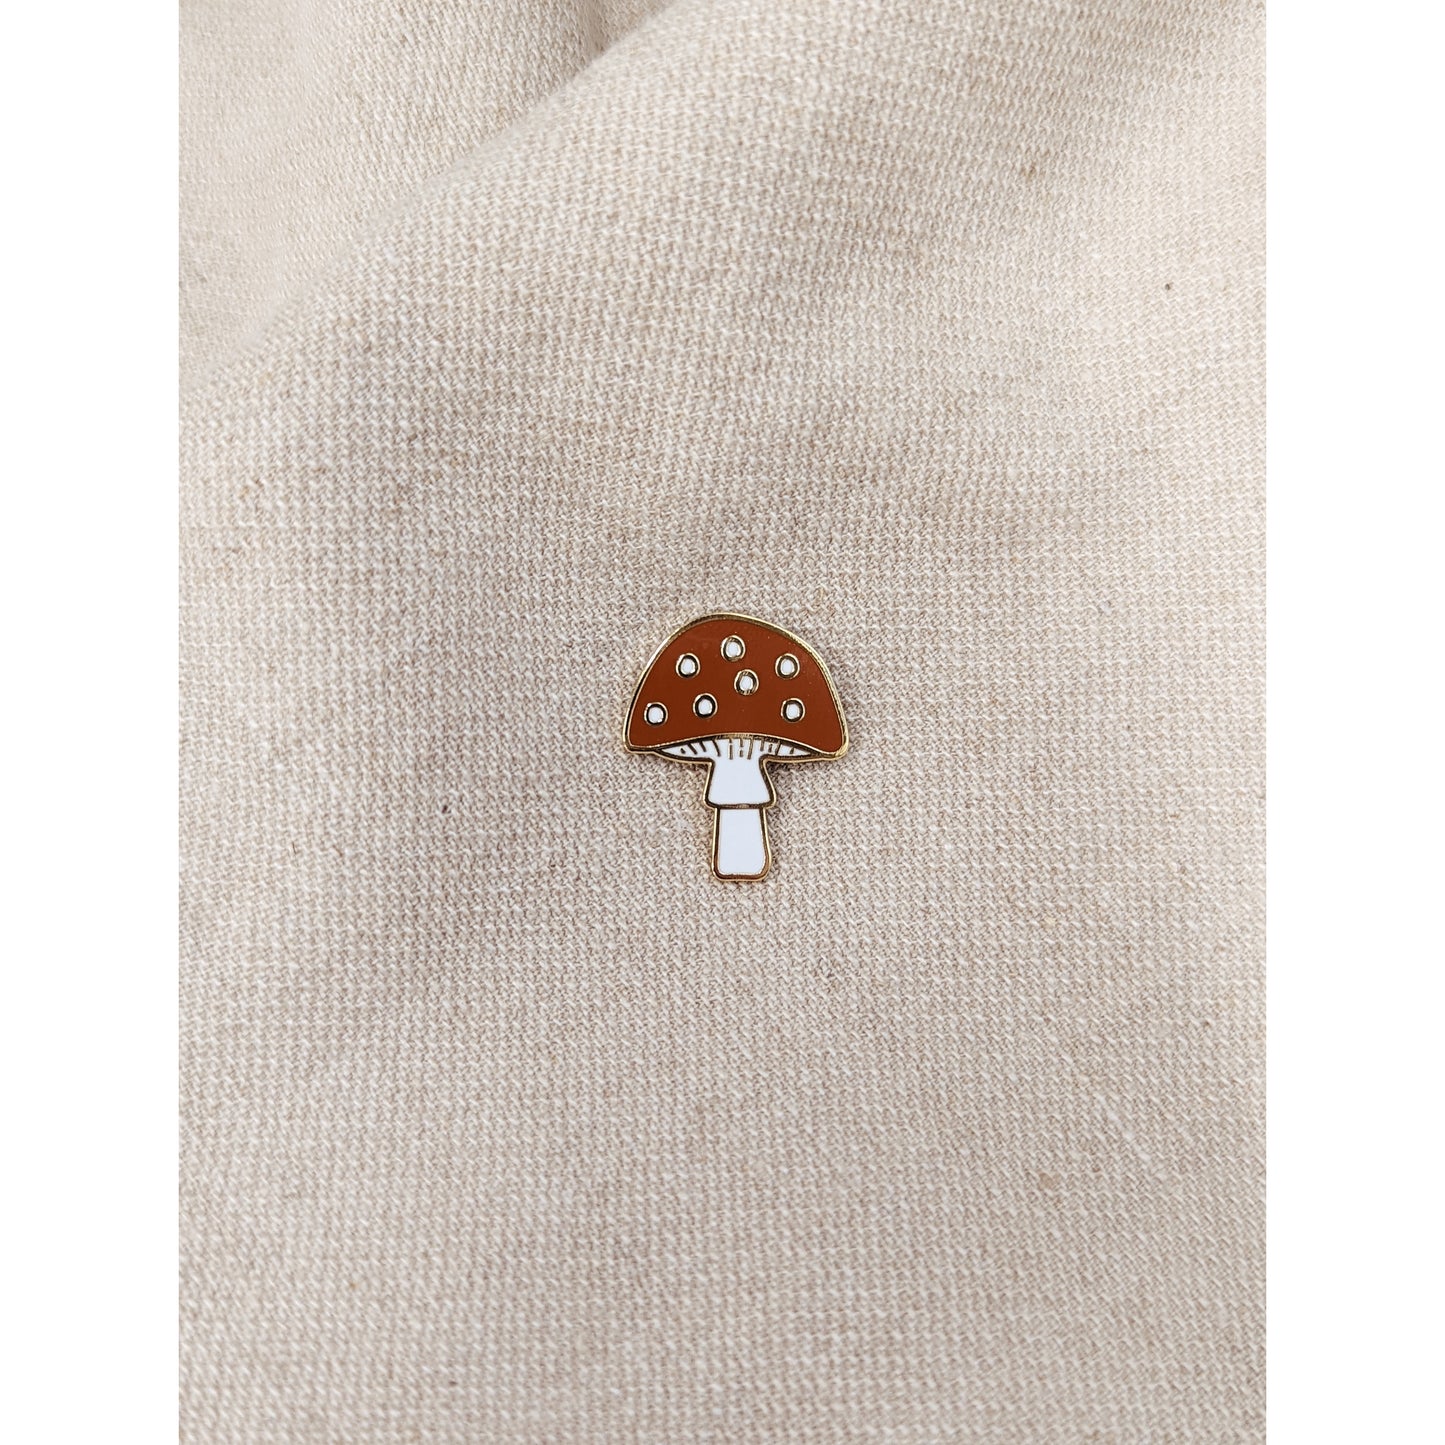 Mushroom Enamel Pin - Mimi and August